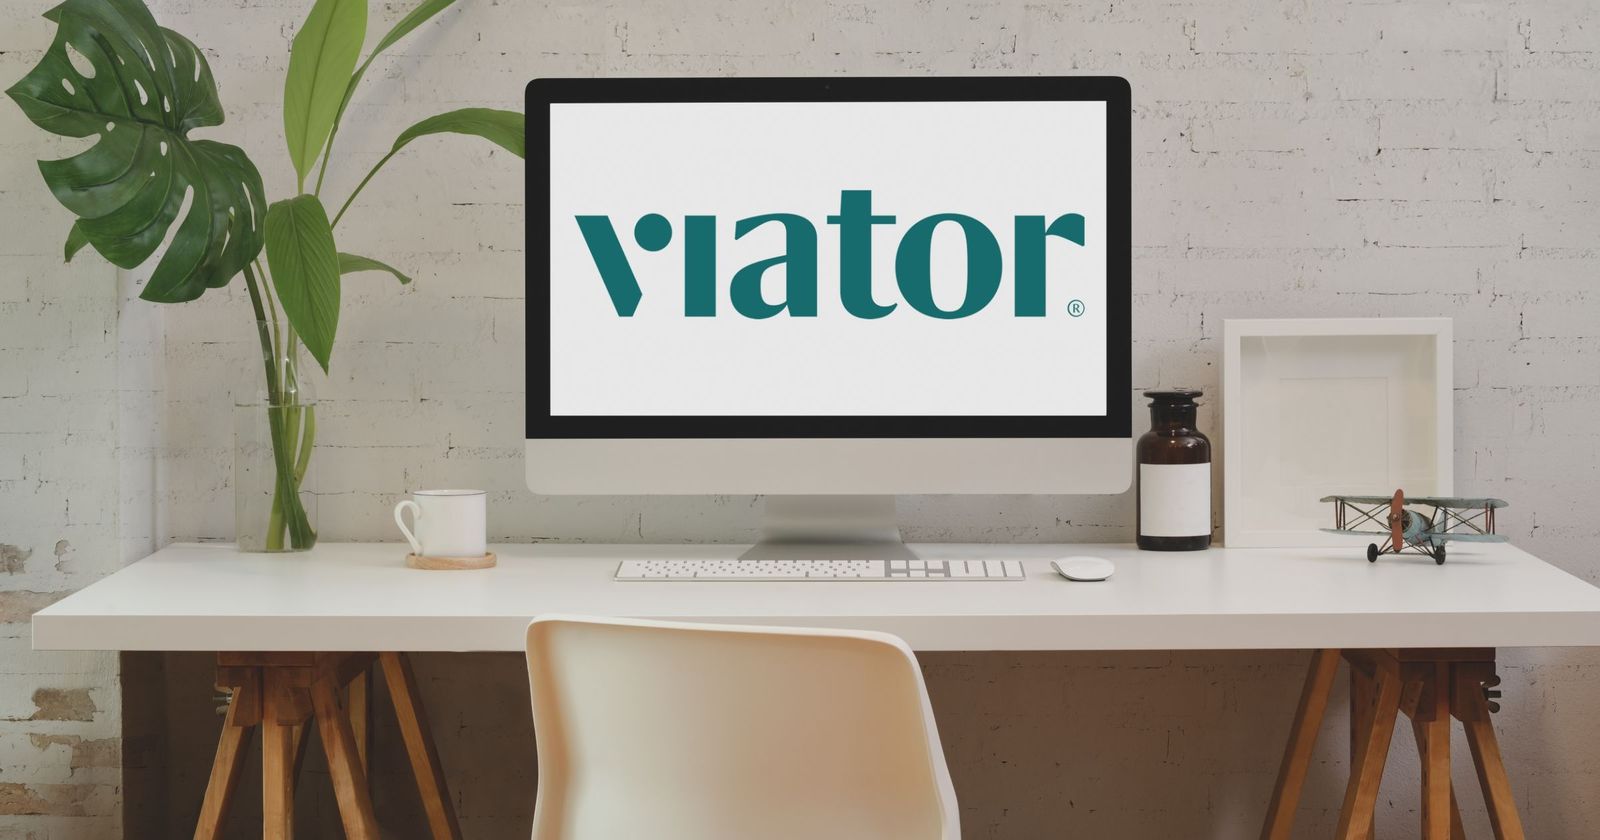 viator featured